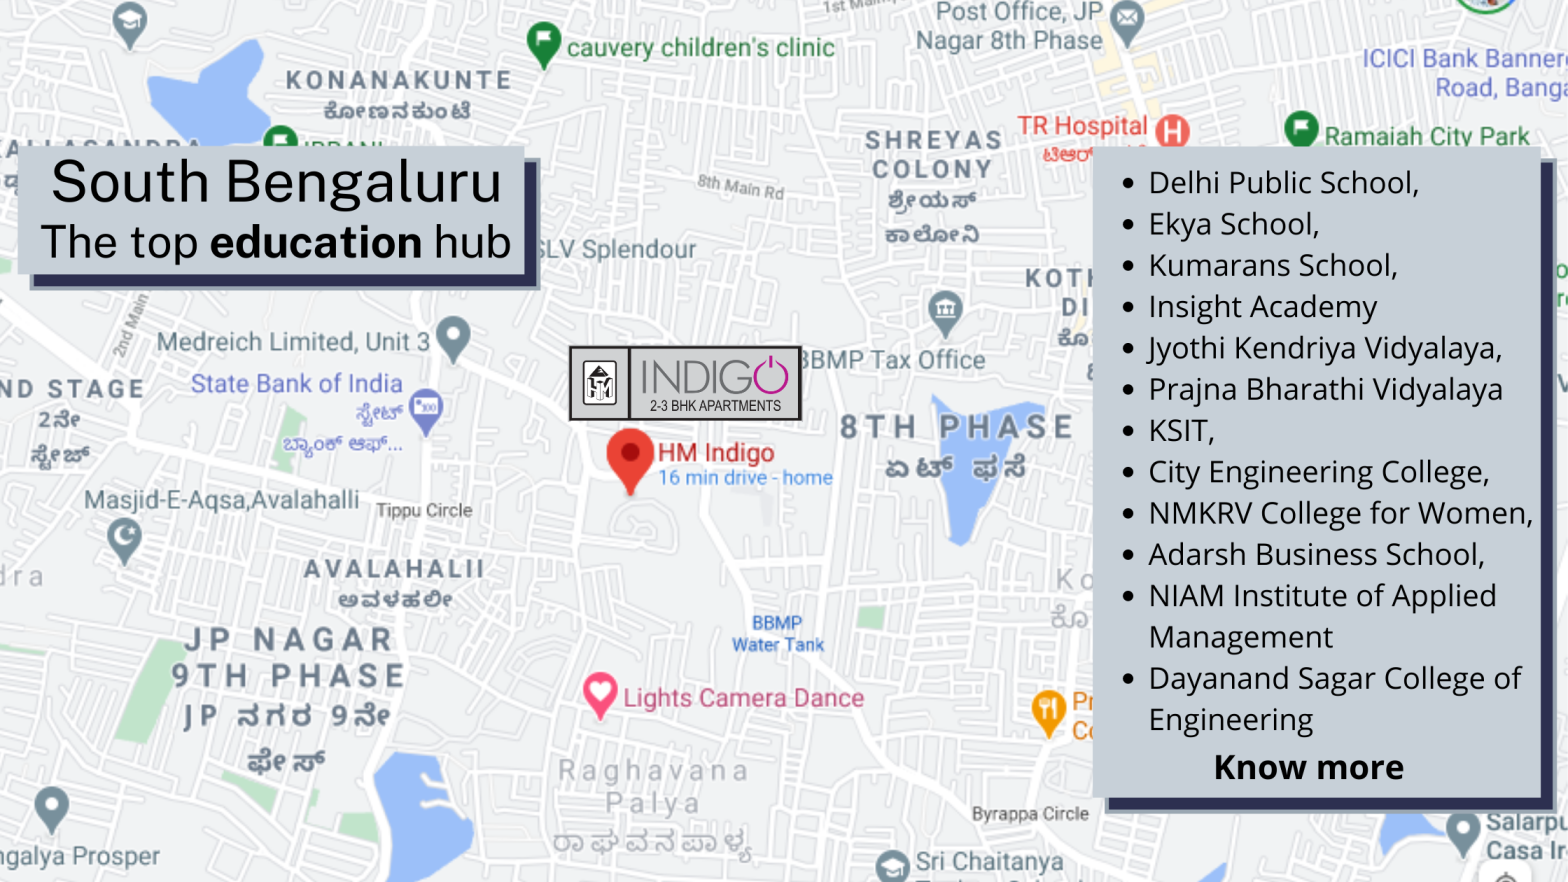 South Bengaluru – the top education hub graces HM Indigo